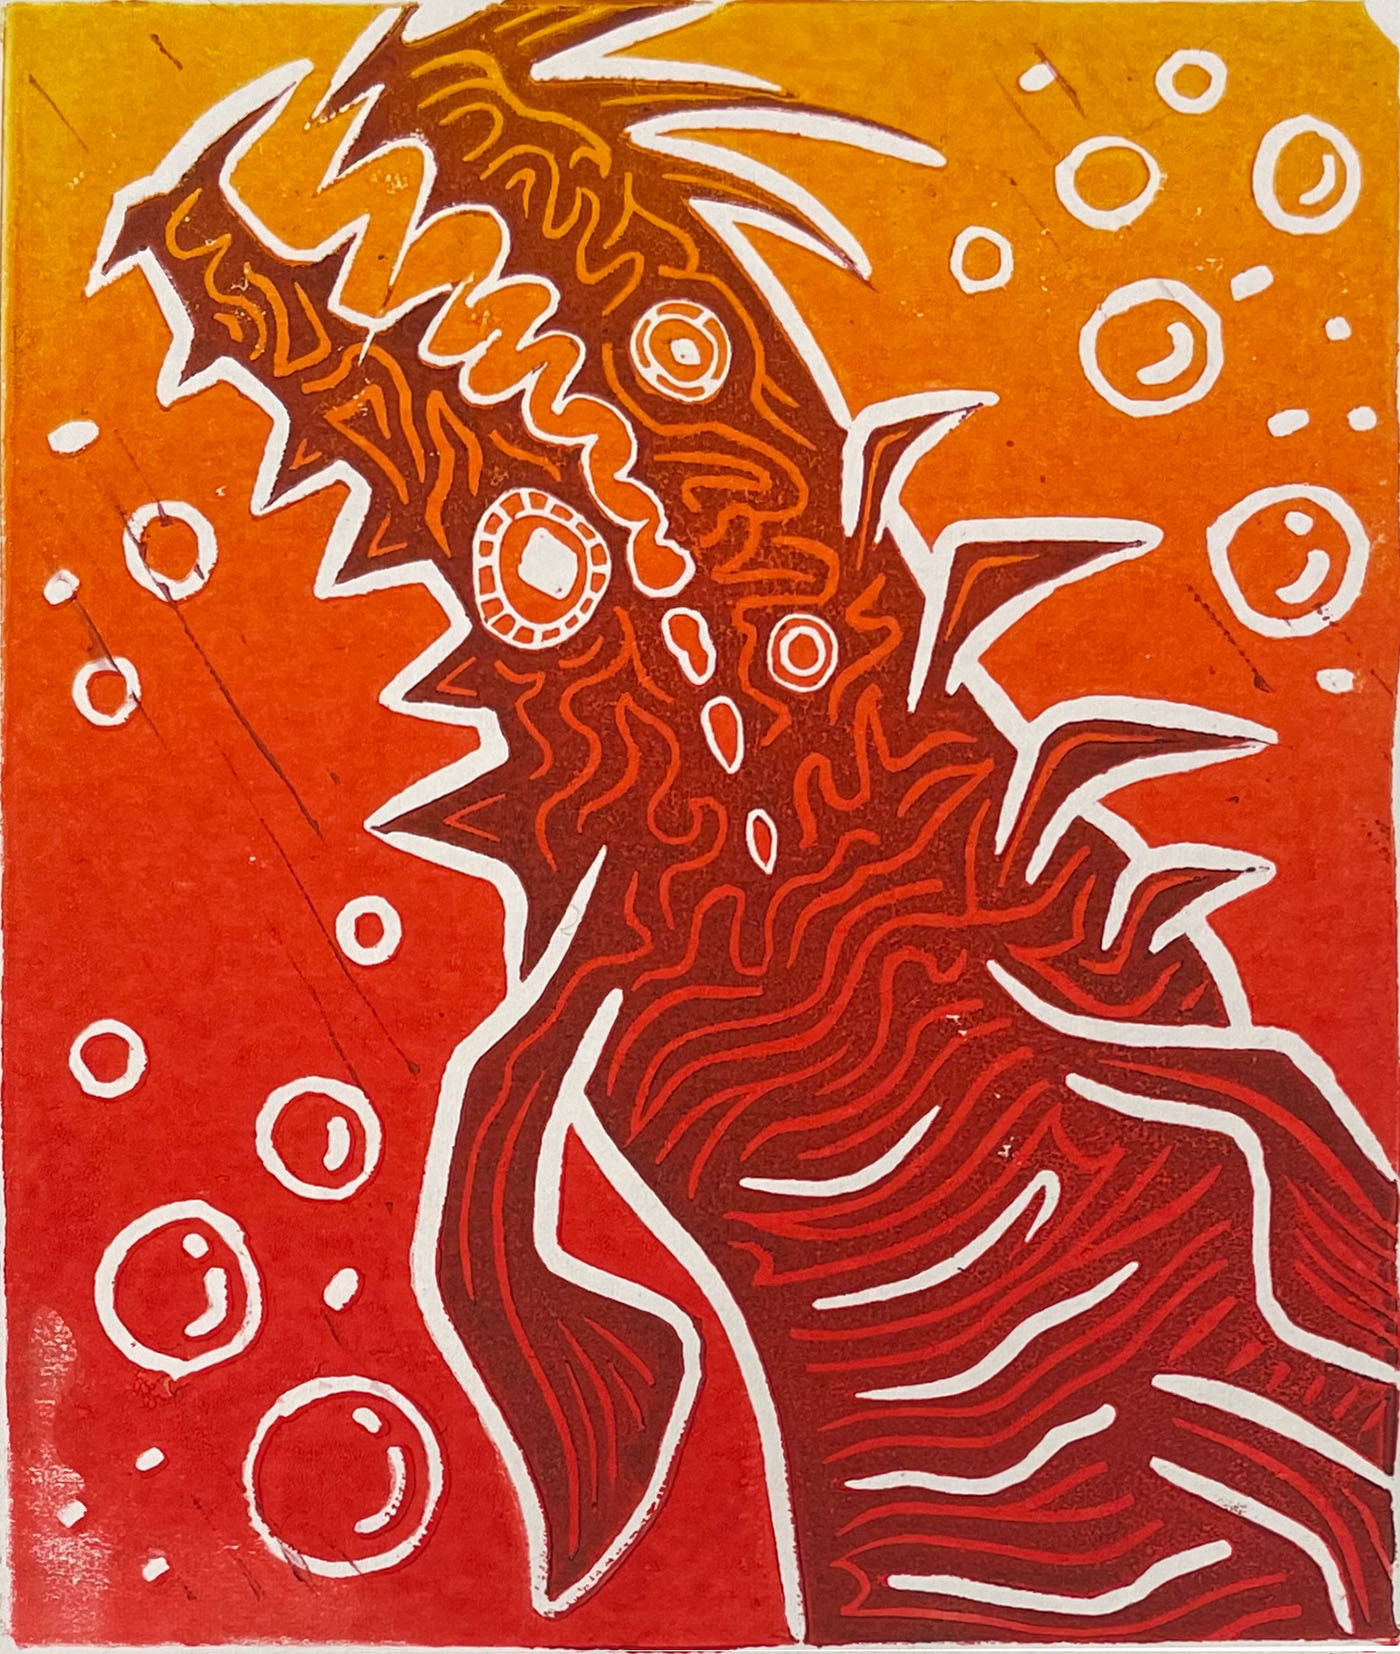 Print of jabberwocky as sea monster